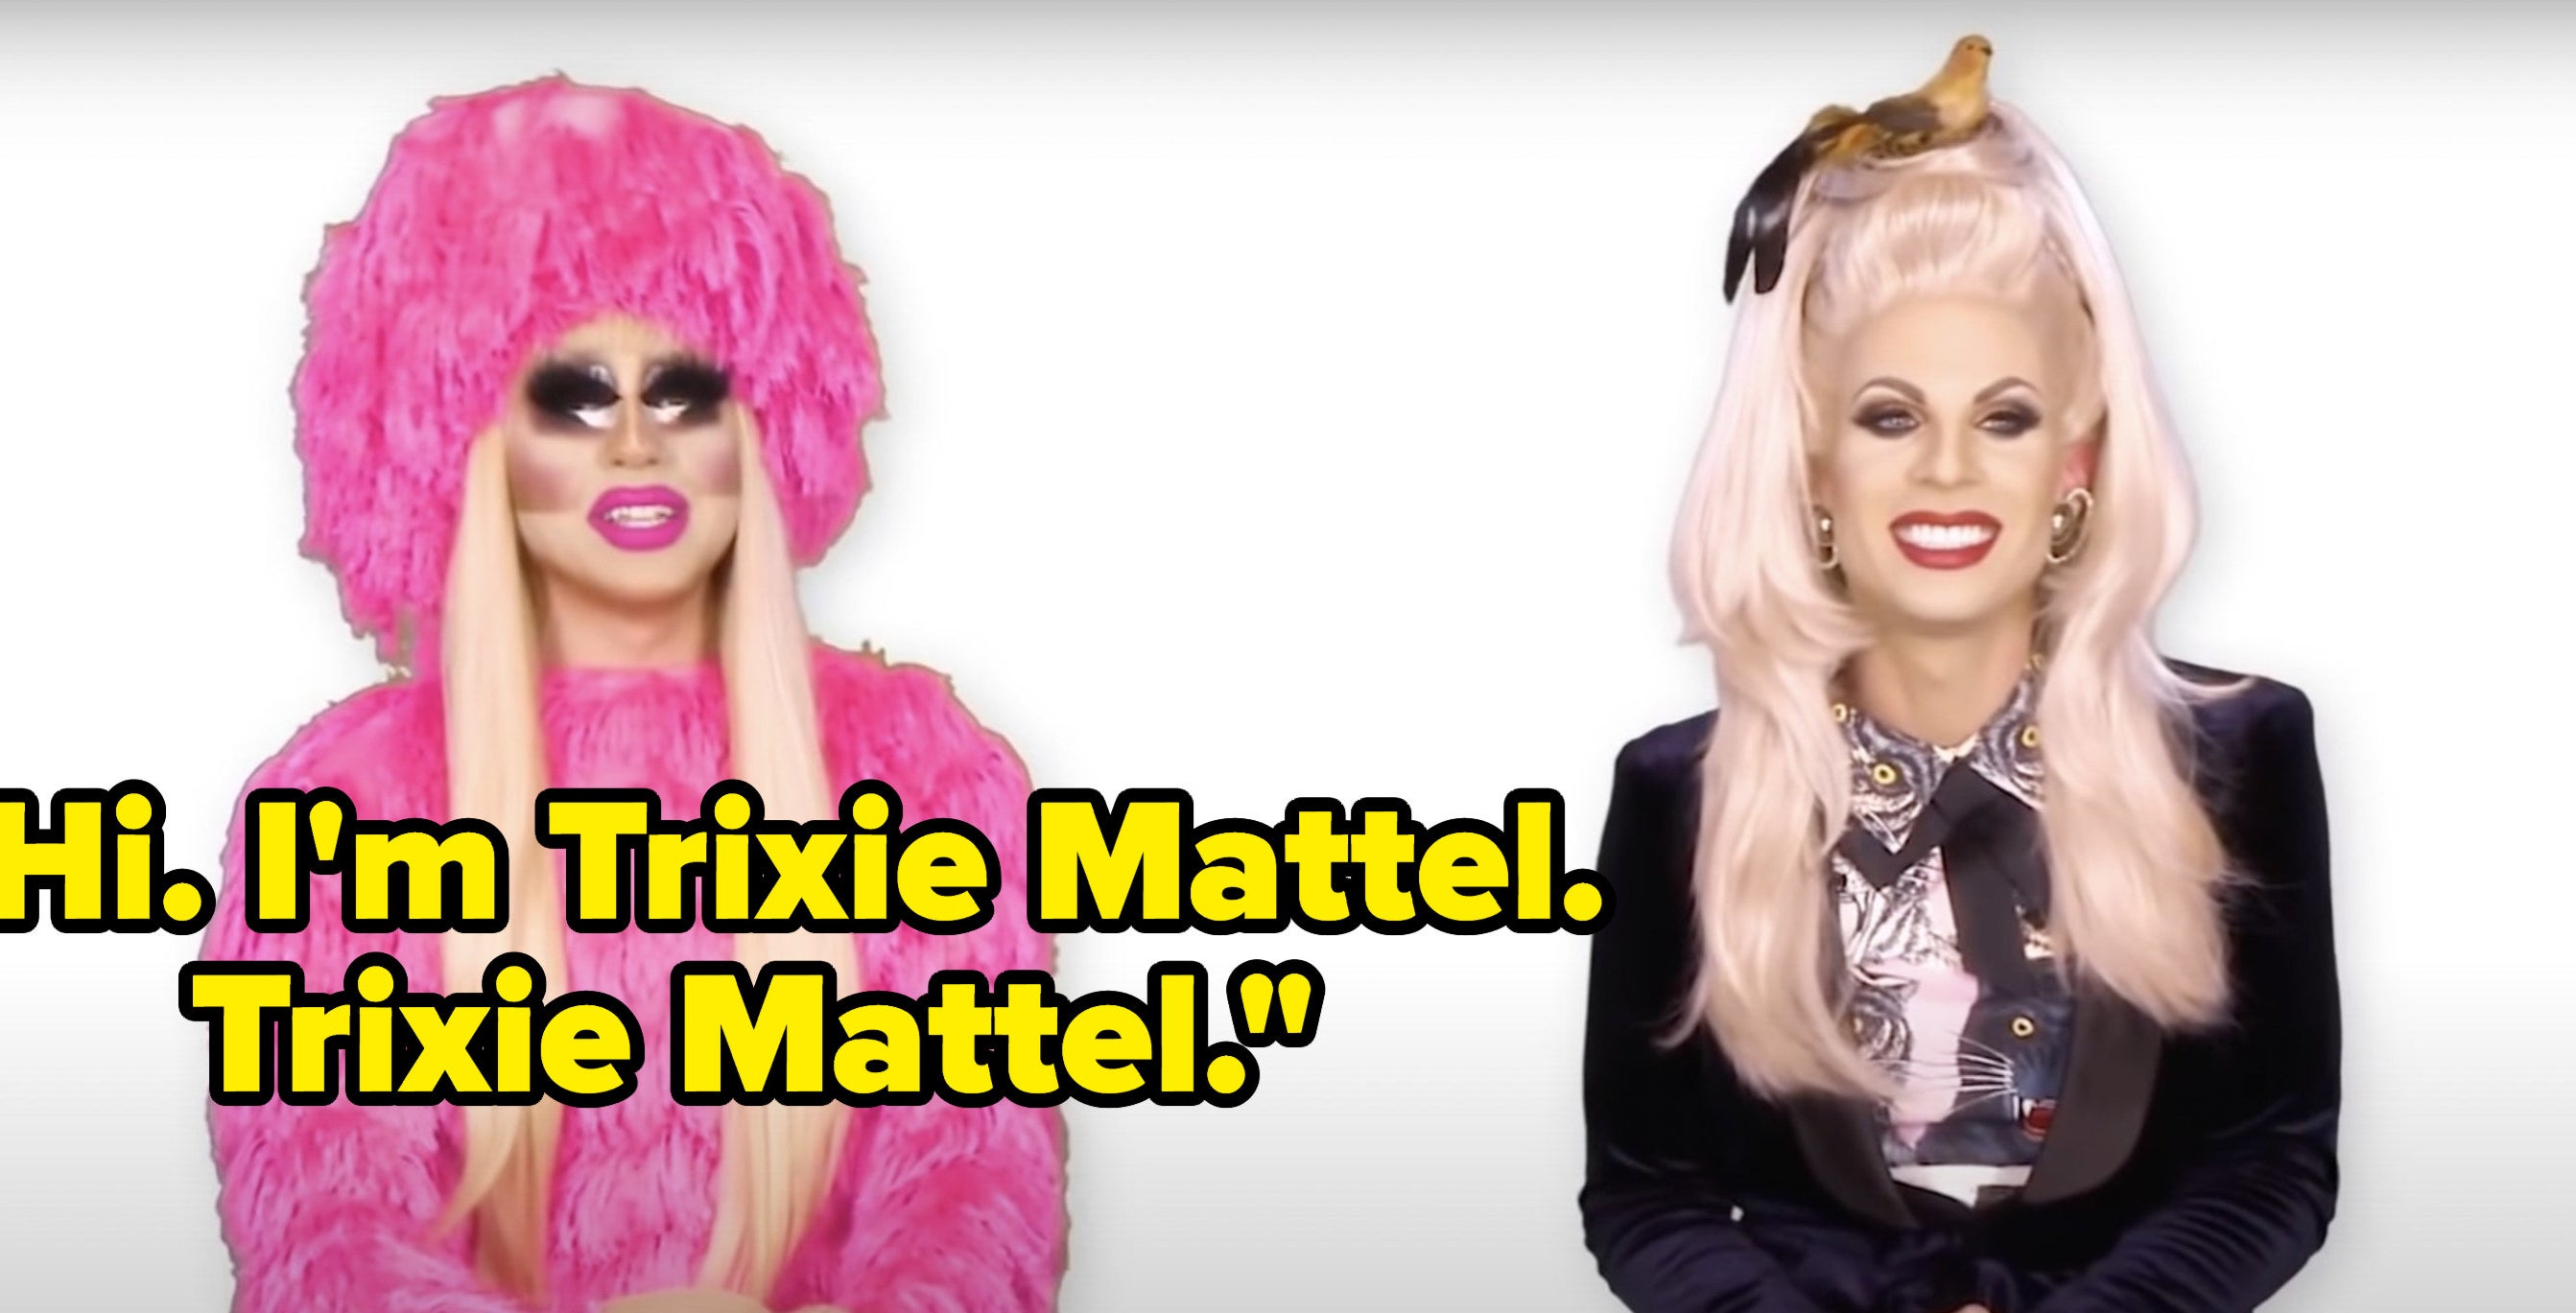 Trixie says, Hi, Im Trixie Mattel, Trixie Mattel